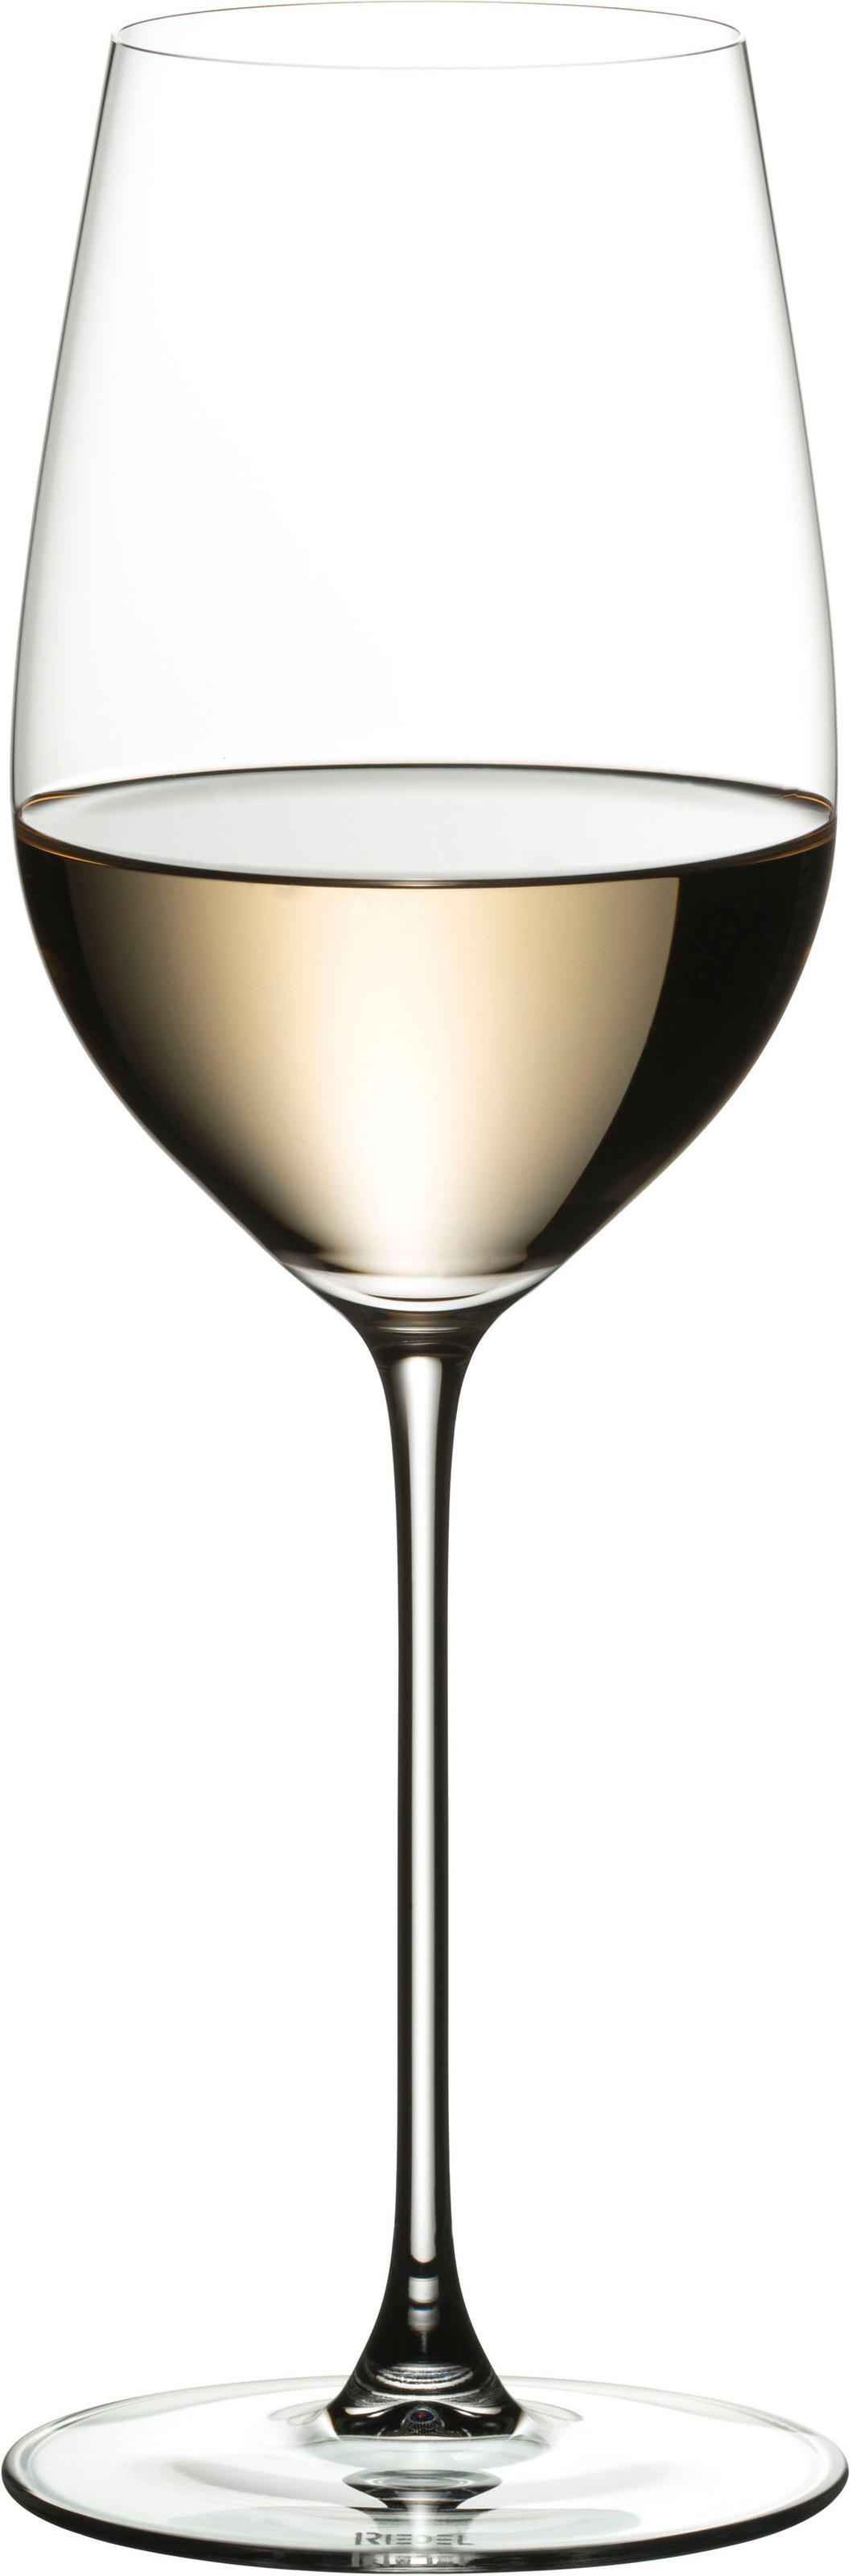 RIEDEL THE WINE GLASS COMPANY Weißweinglas »Veritas«, (Set, 2 tlg.), Made in Germany, 409 ml, 2-teilig